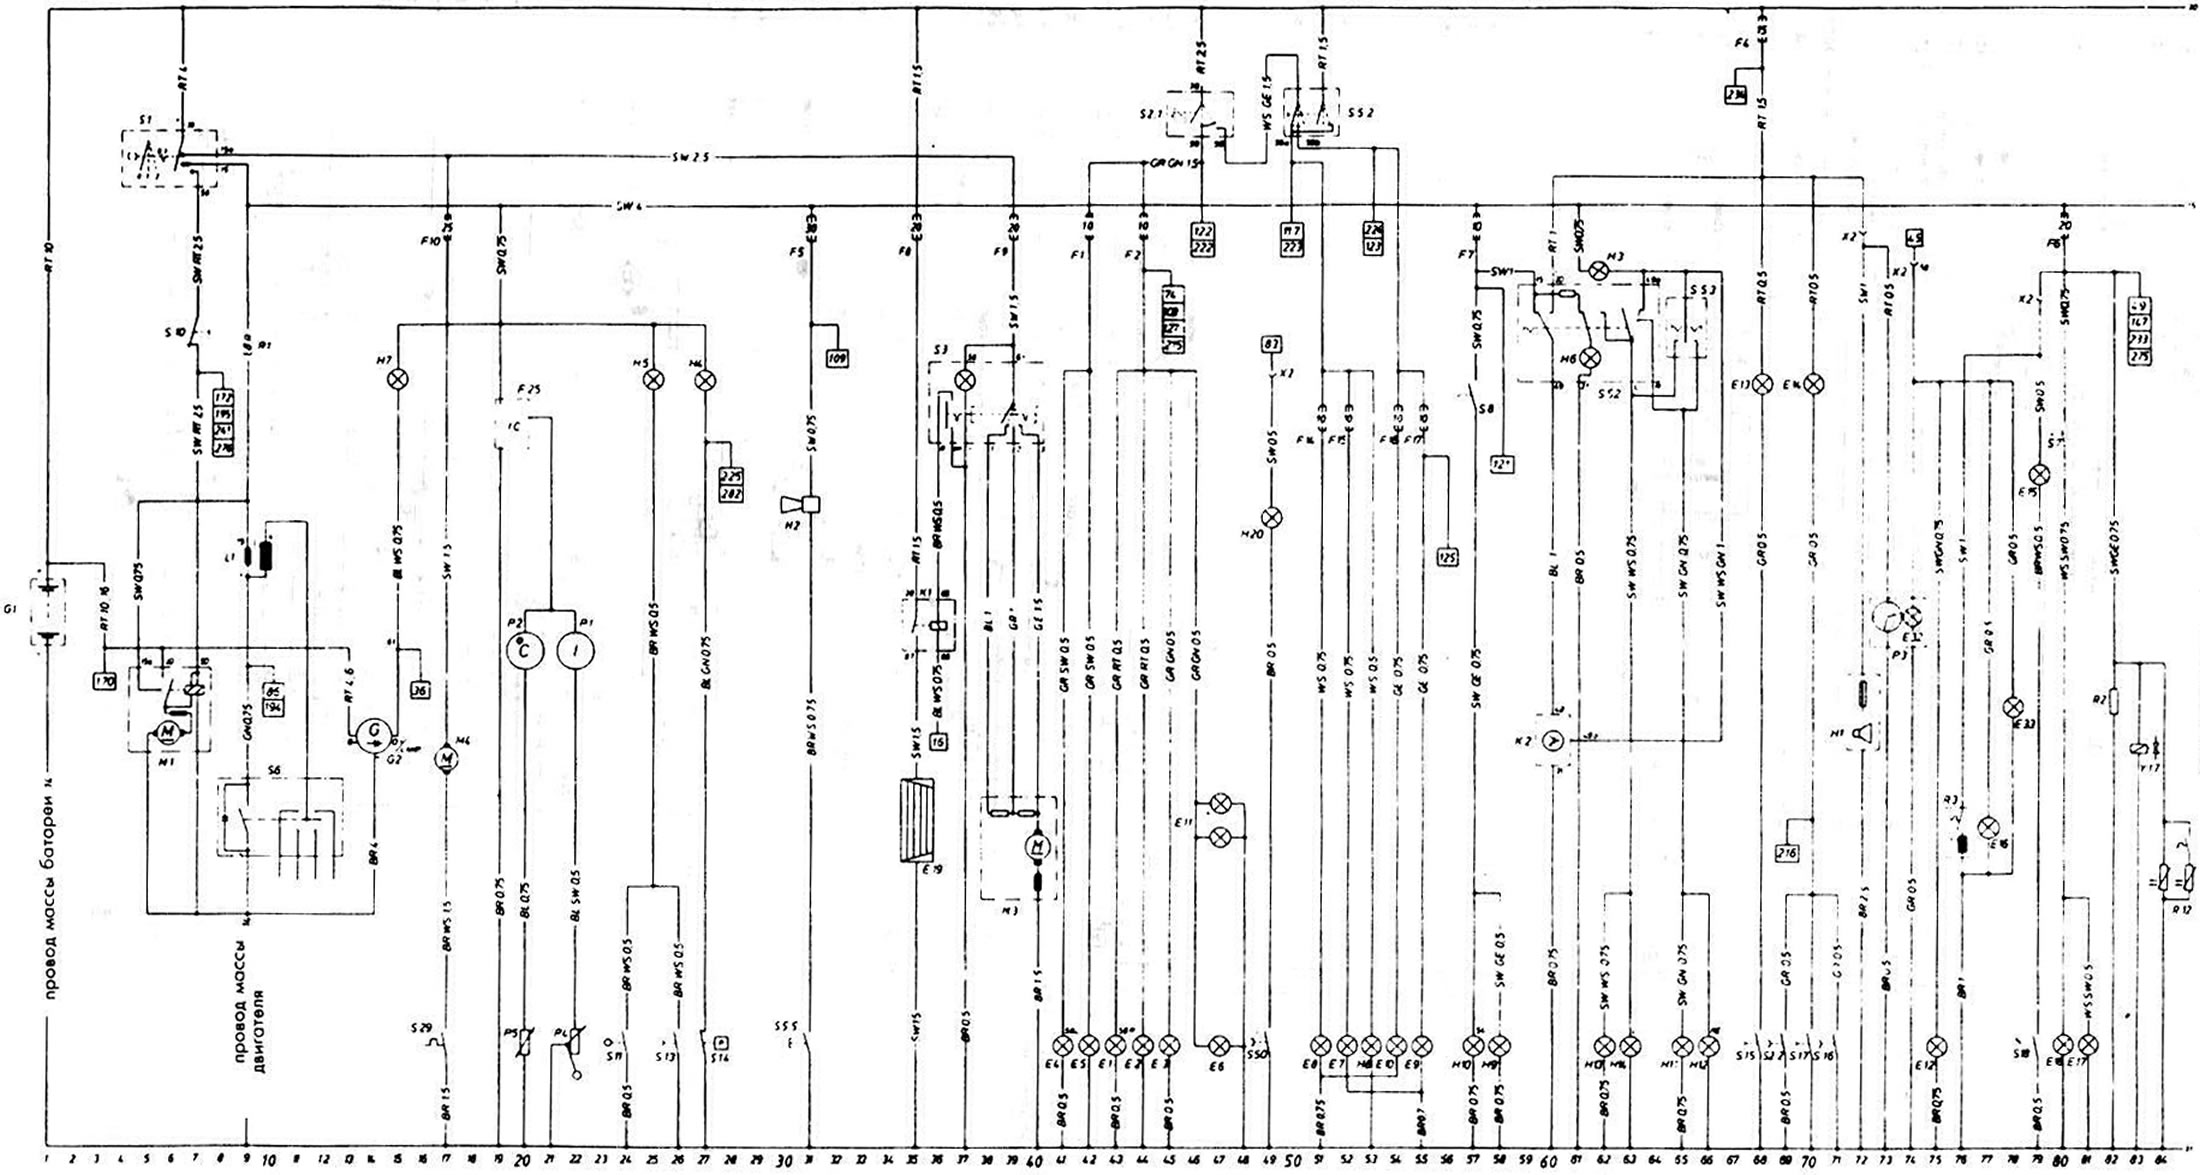 Wiring diagram I (Opel Kadett D 1979-1984: Electrical equipment .